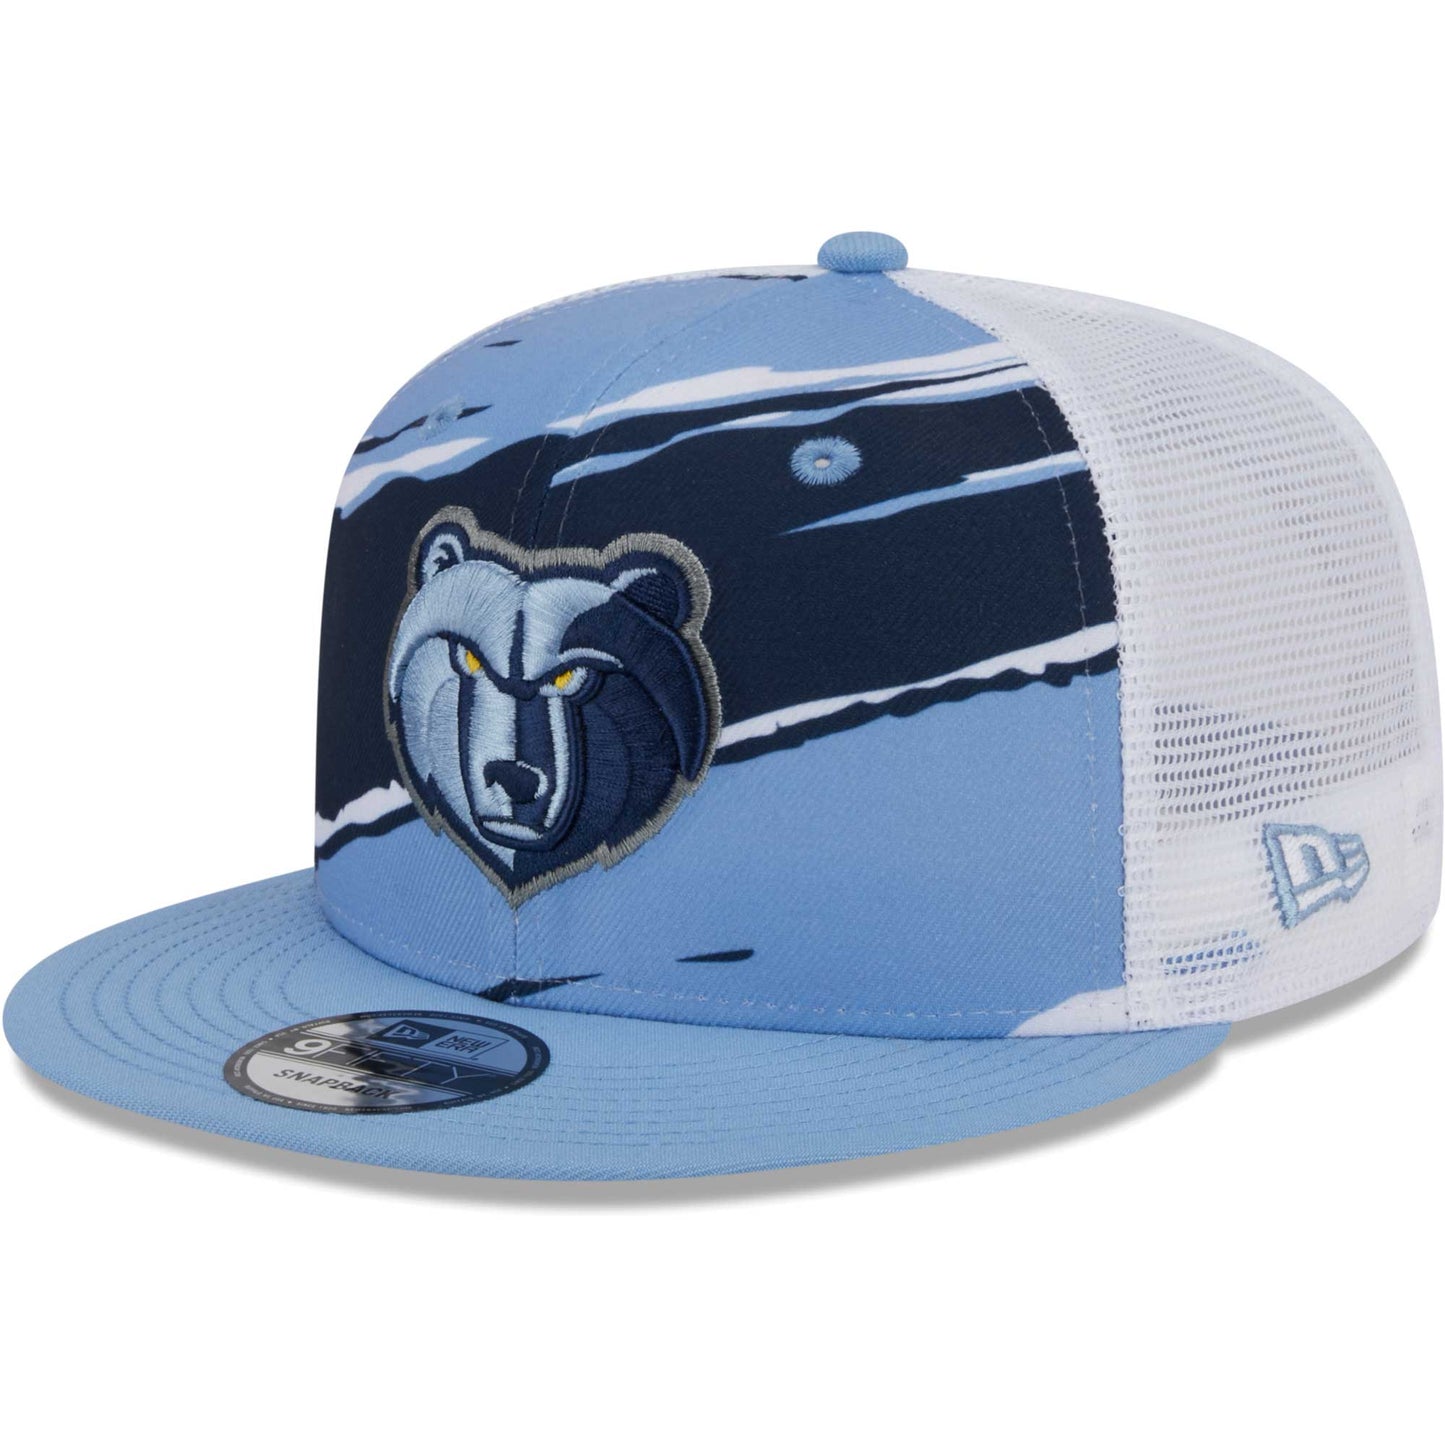 Memphis Grizzlies New Era Tear Trucker 9FIFTY Adjustable Hat - Light Blue/White